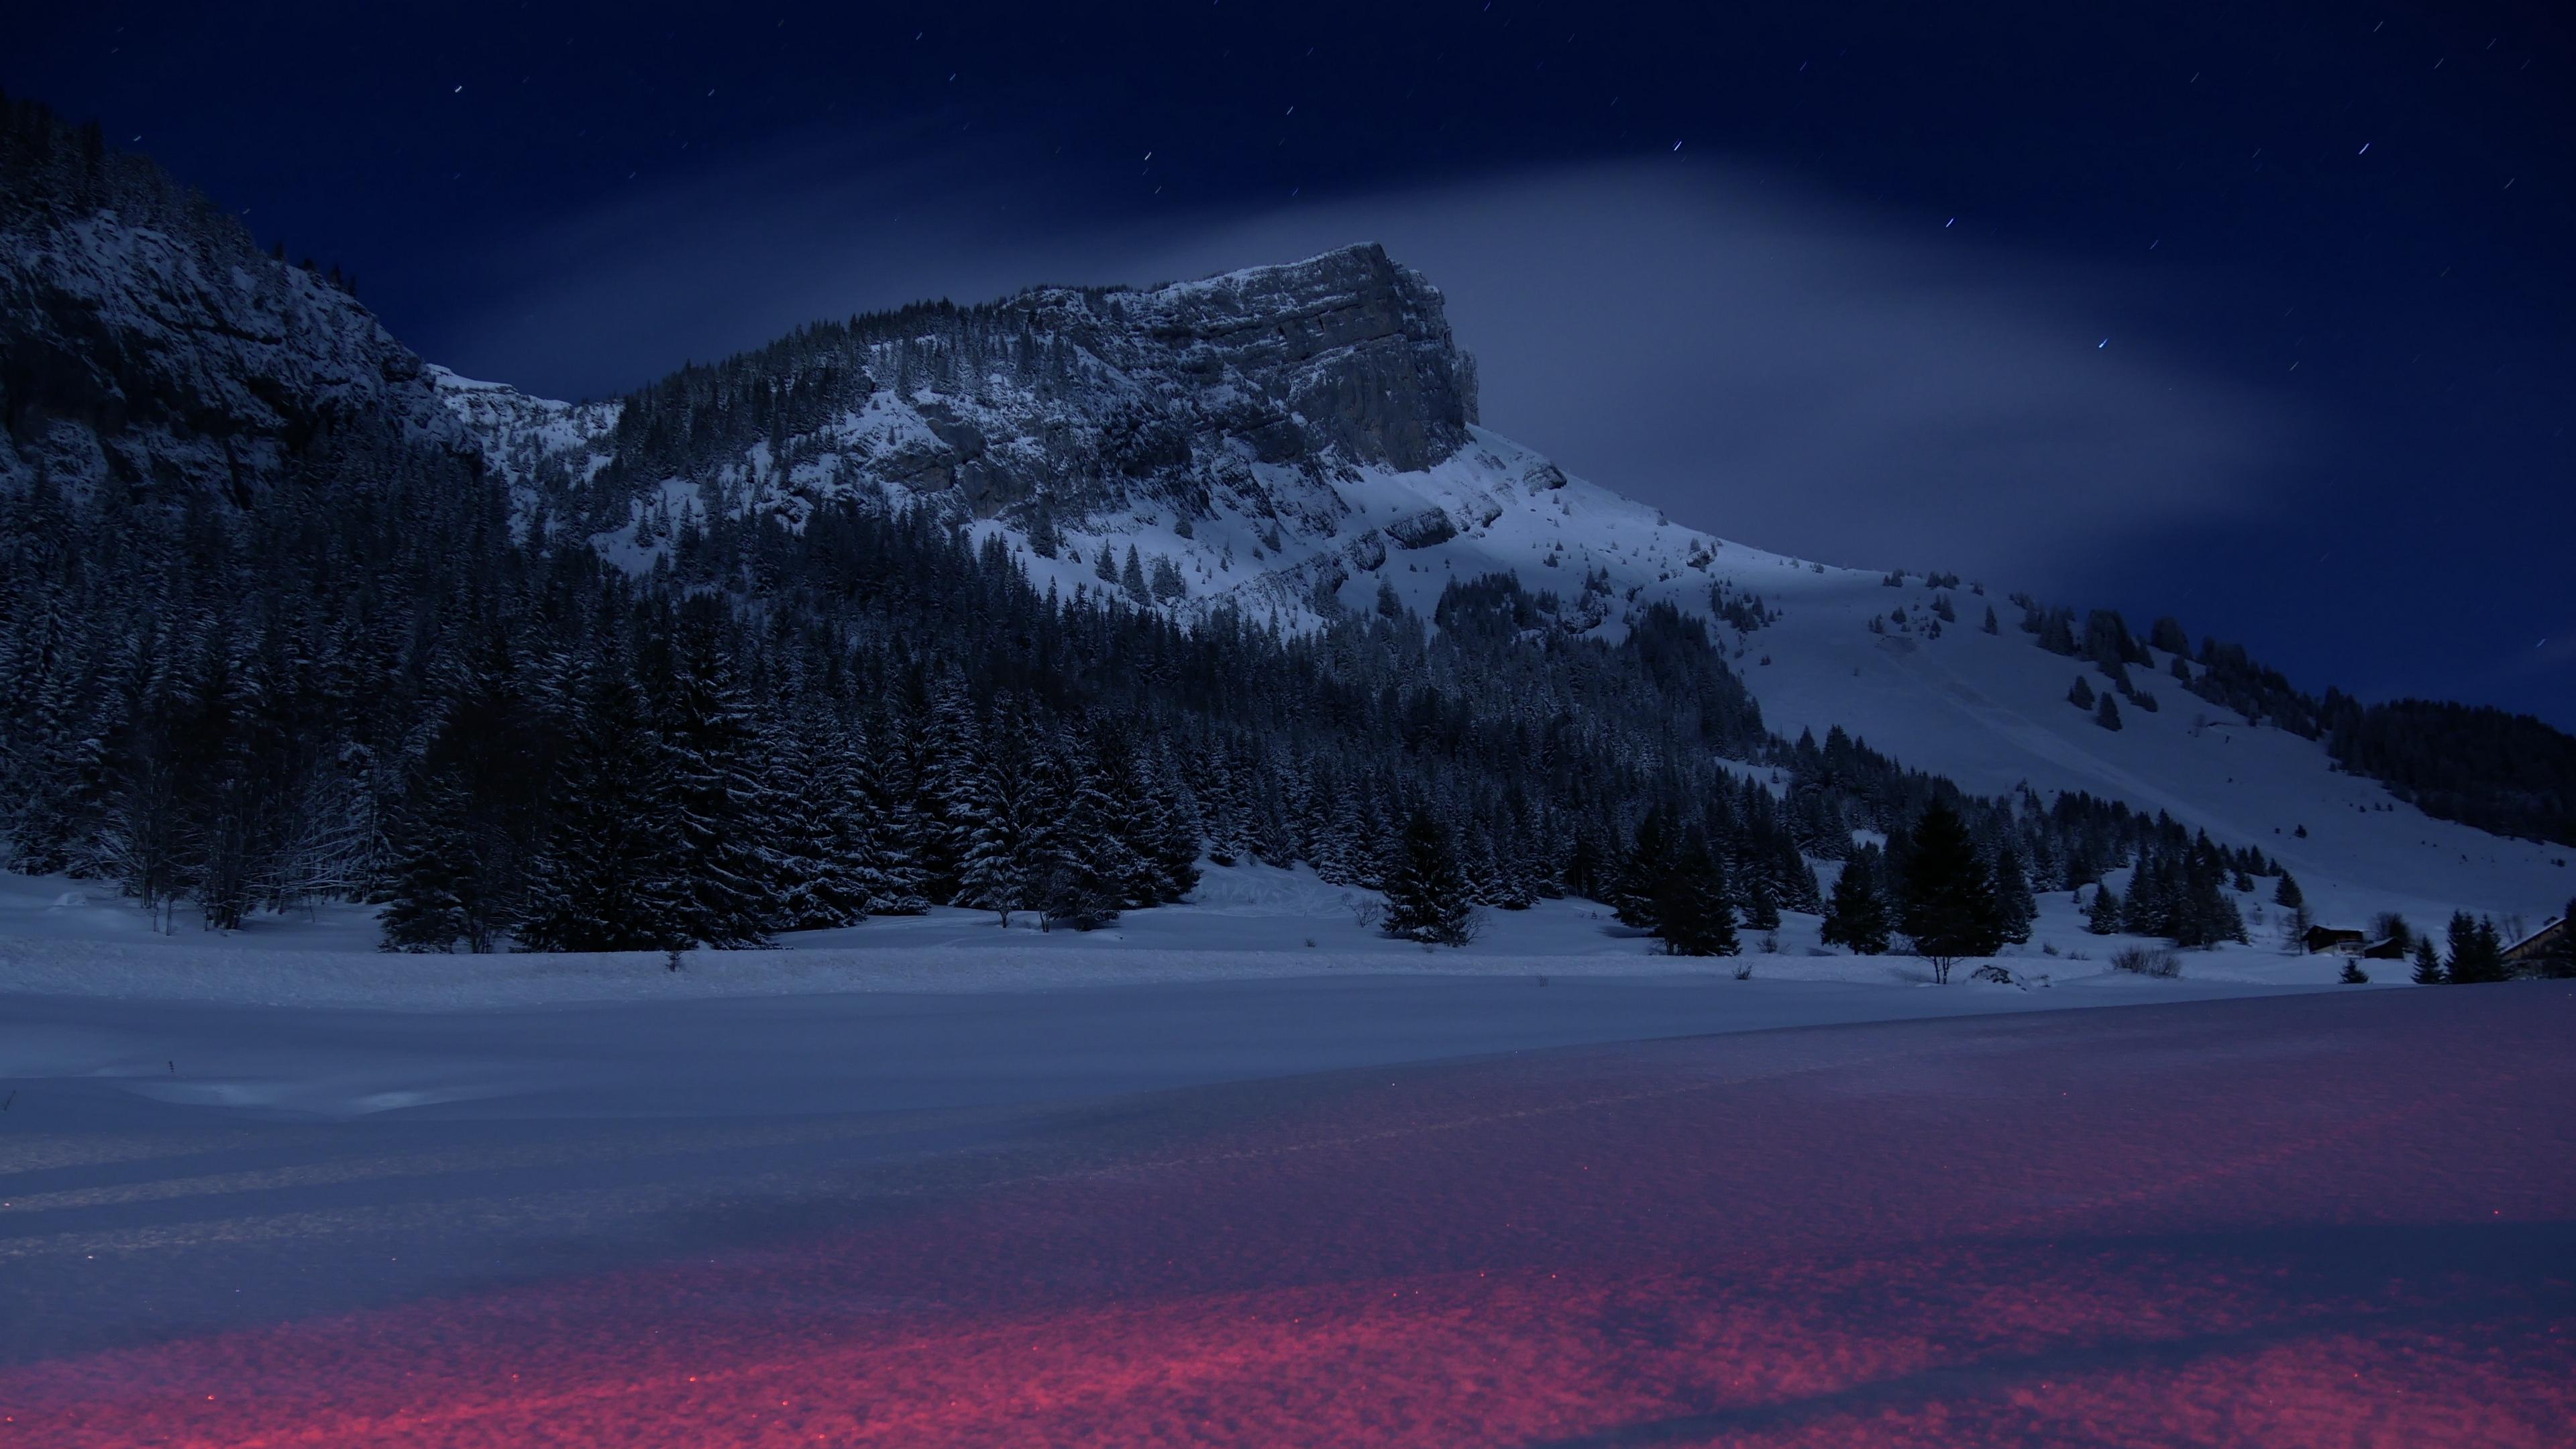 Download wallpaper 3840x2160 mountains, night, winter, snow